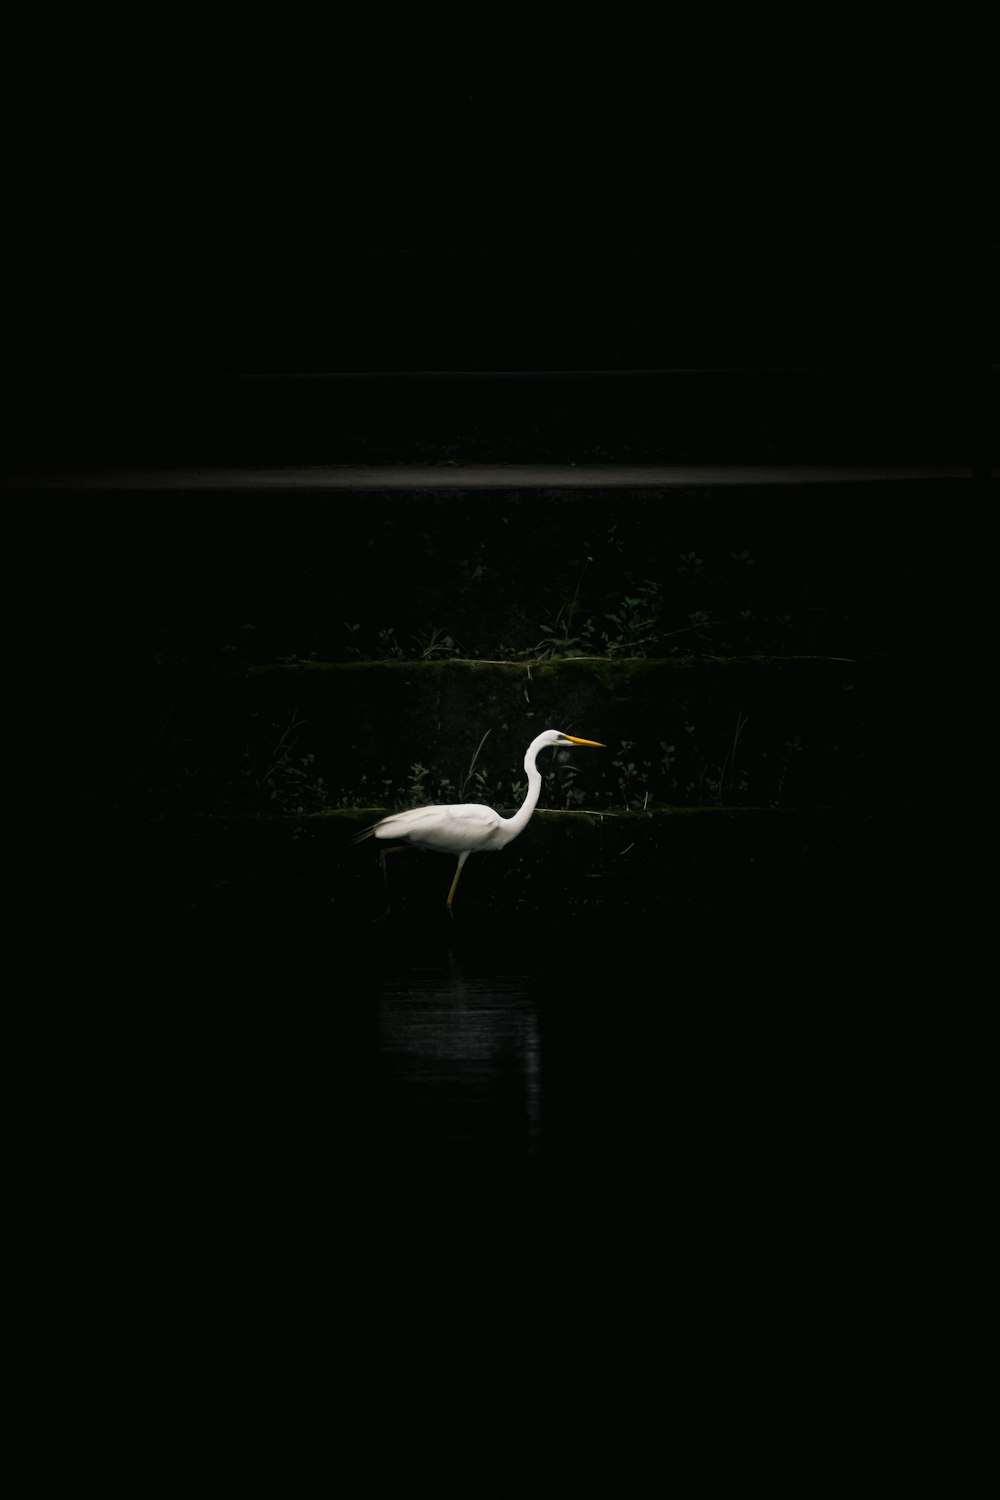 a white bird is standing in the dark water